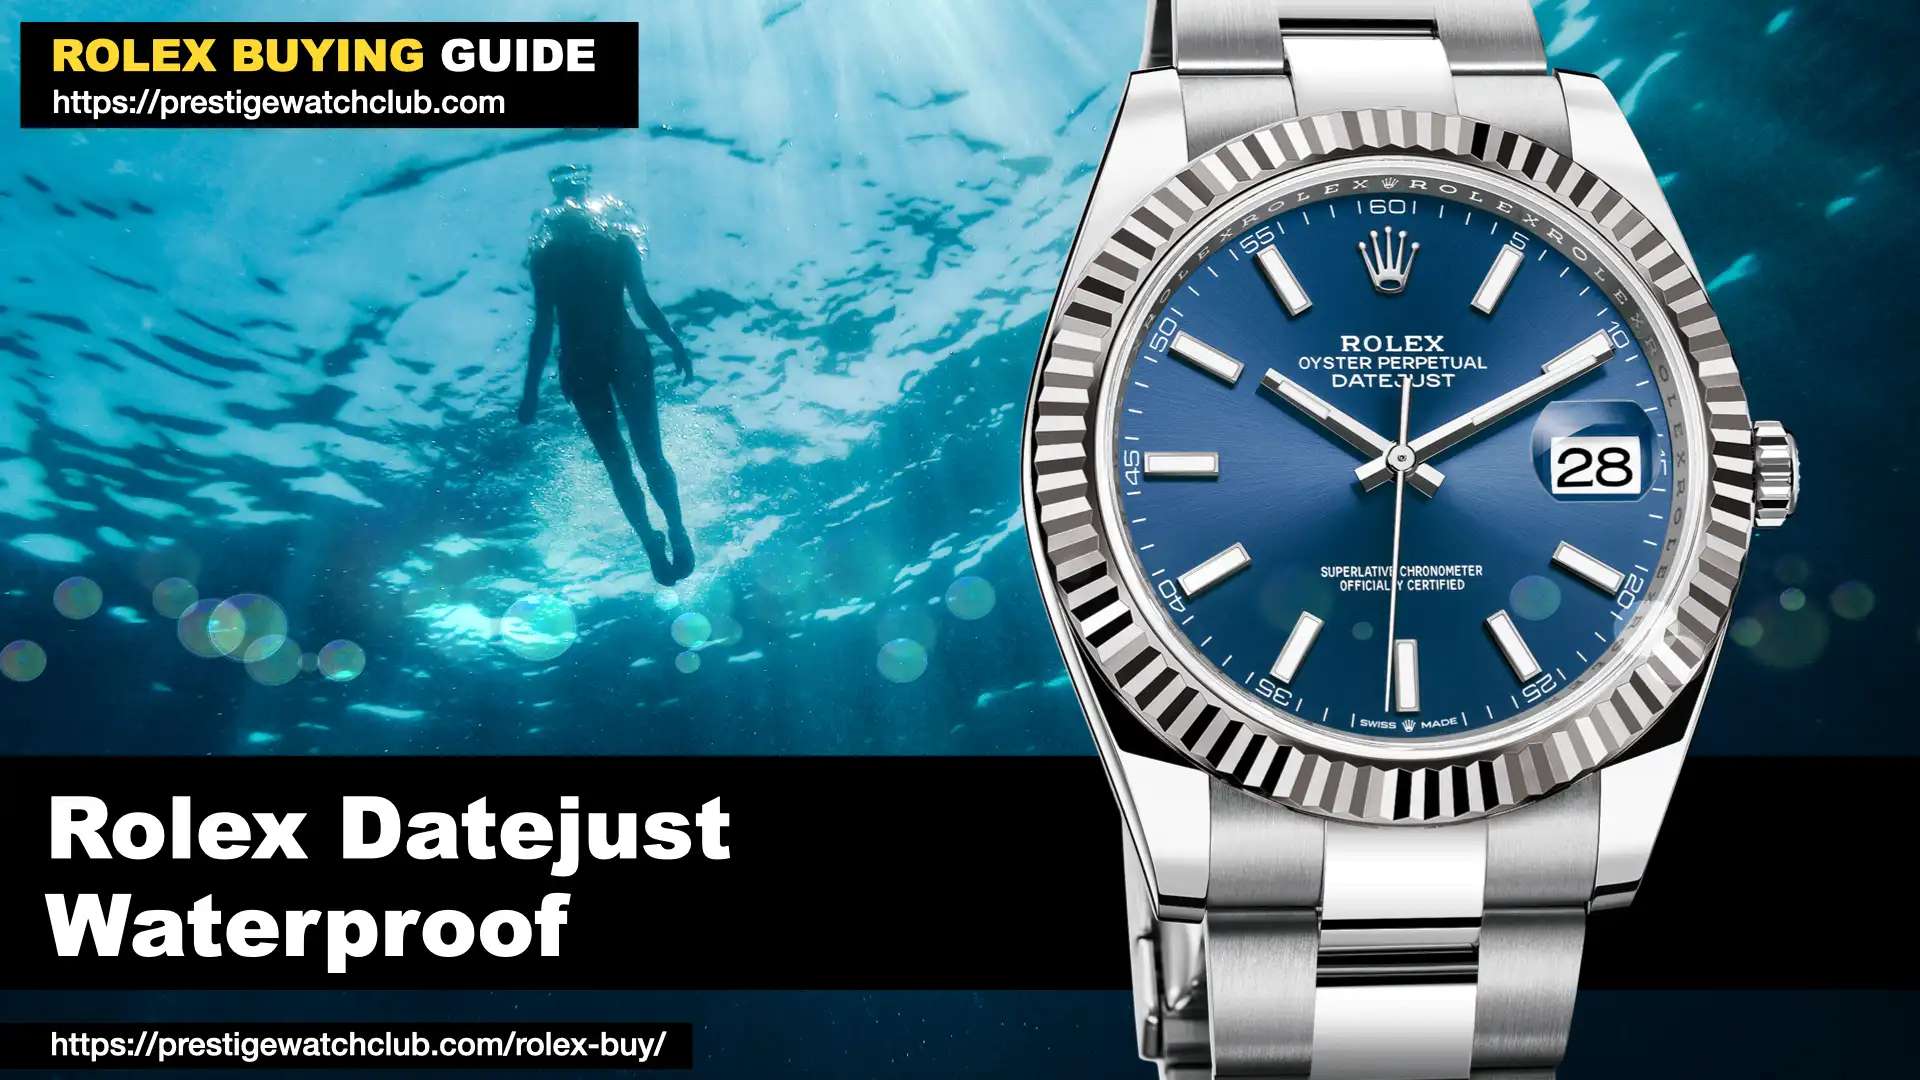 Is The Rolex Datejust Waterproof?